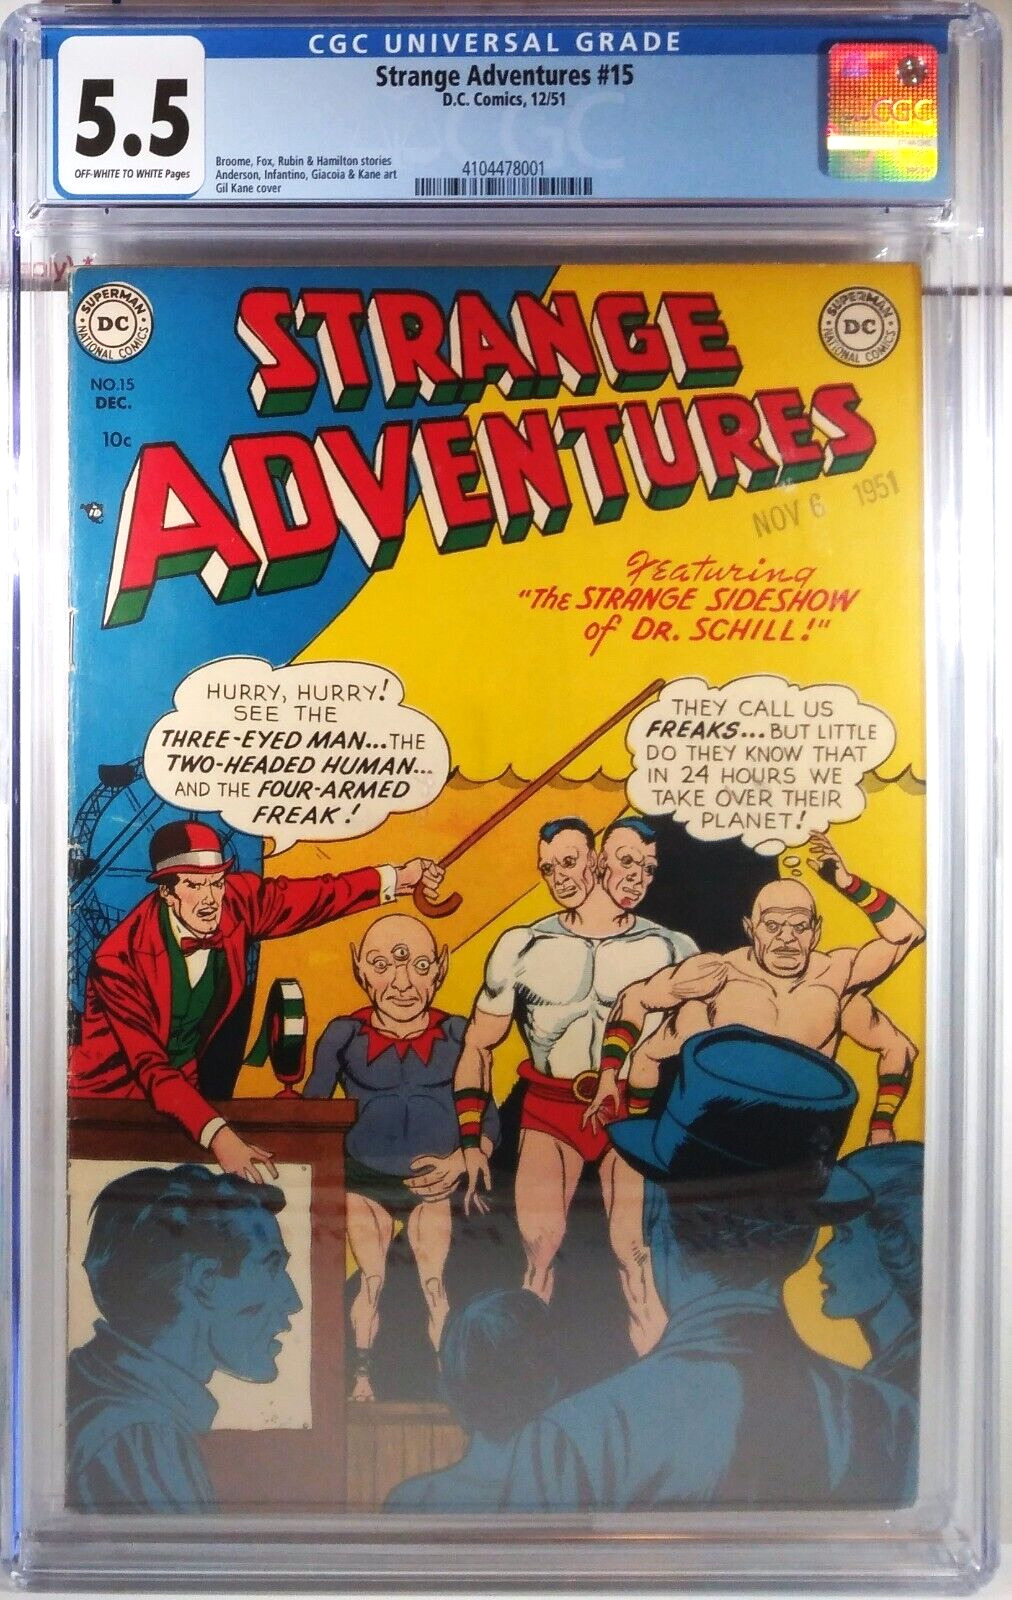 🎪👽🛸 CGC 5.5 STRANGE ADVENTURES #15 DC COMICS 1951 ALIEN UFO CIRCUS GOLDEN AGE